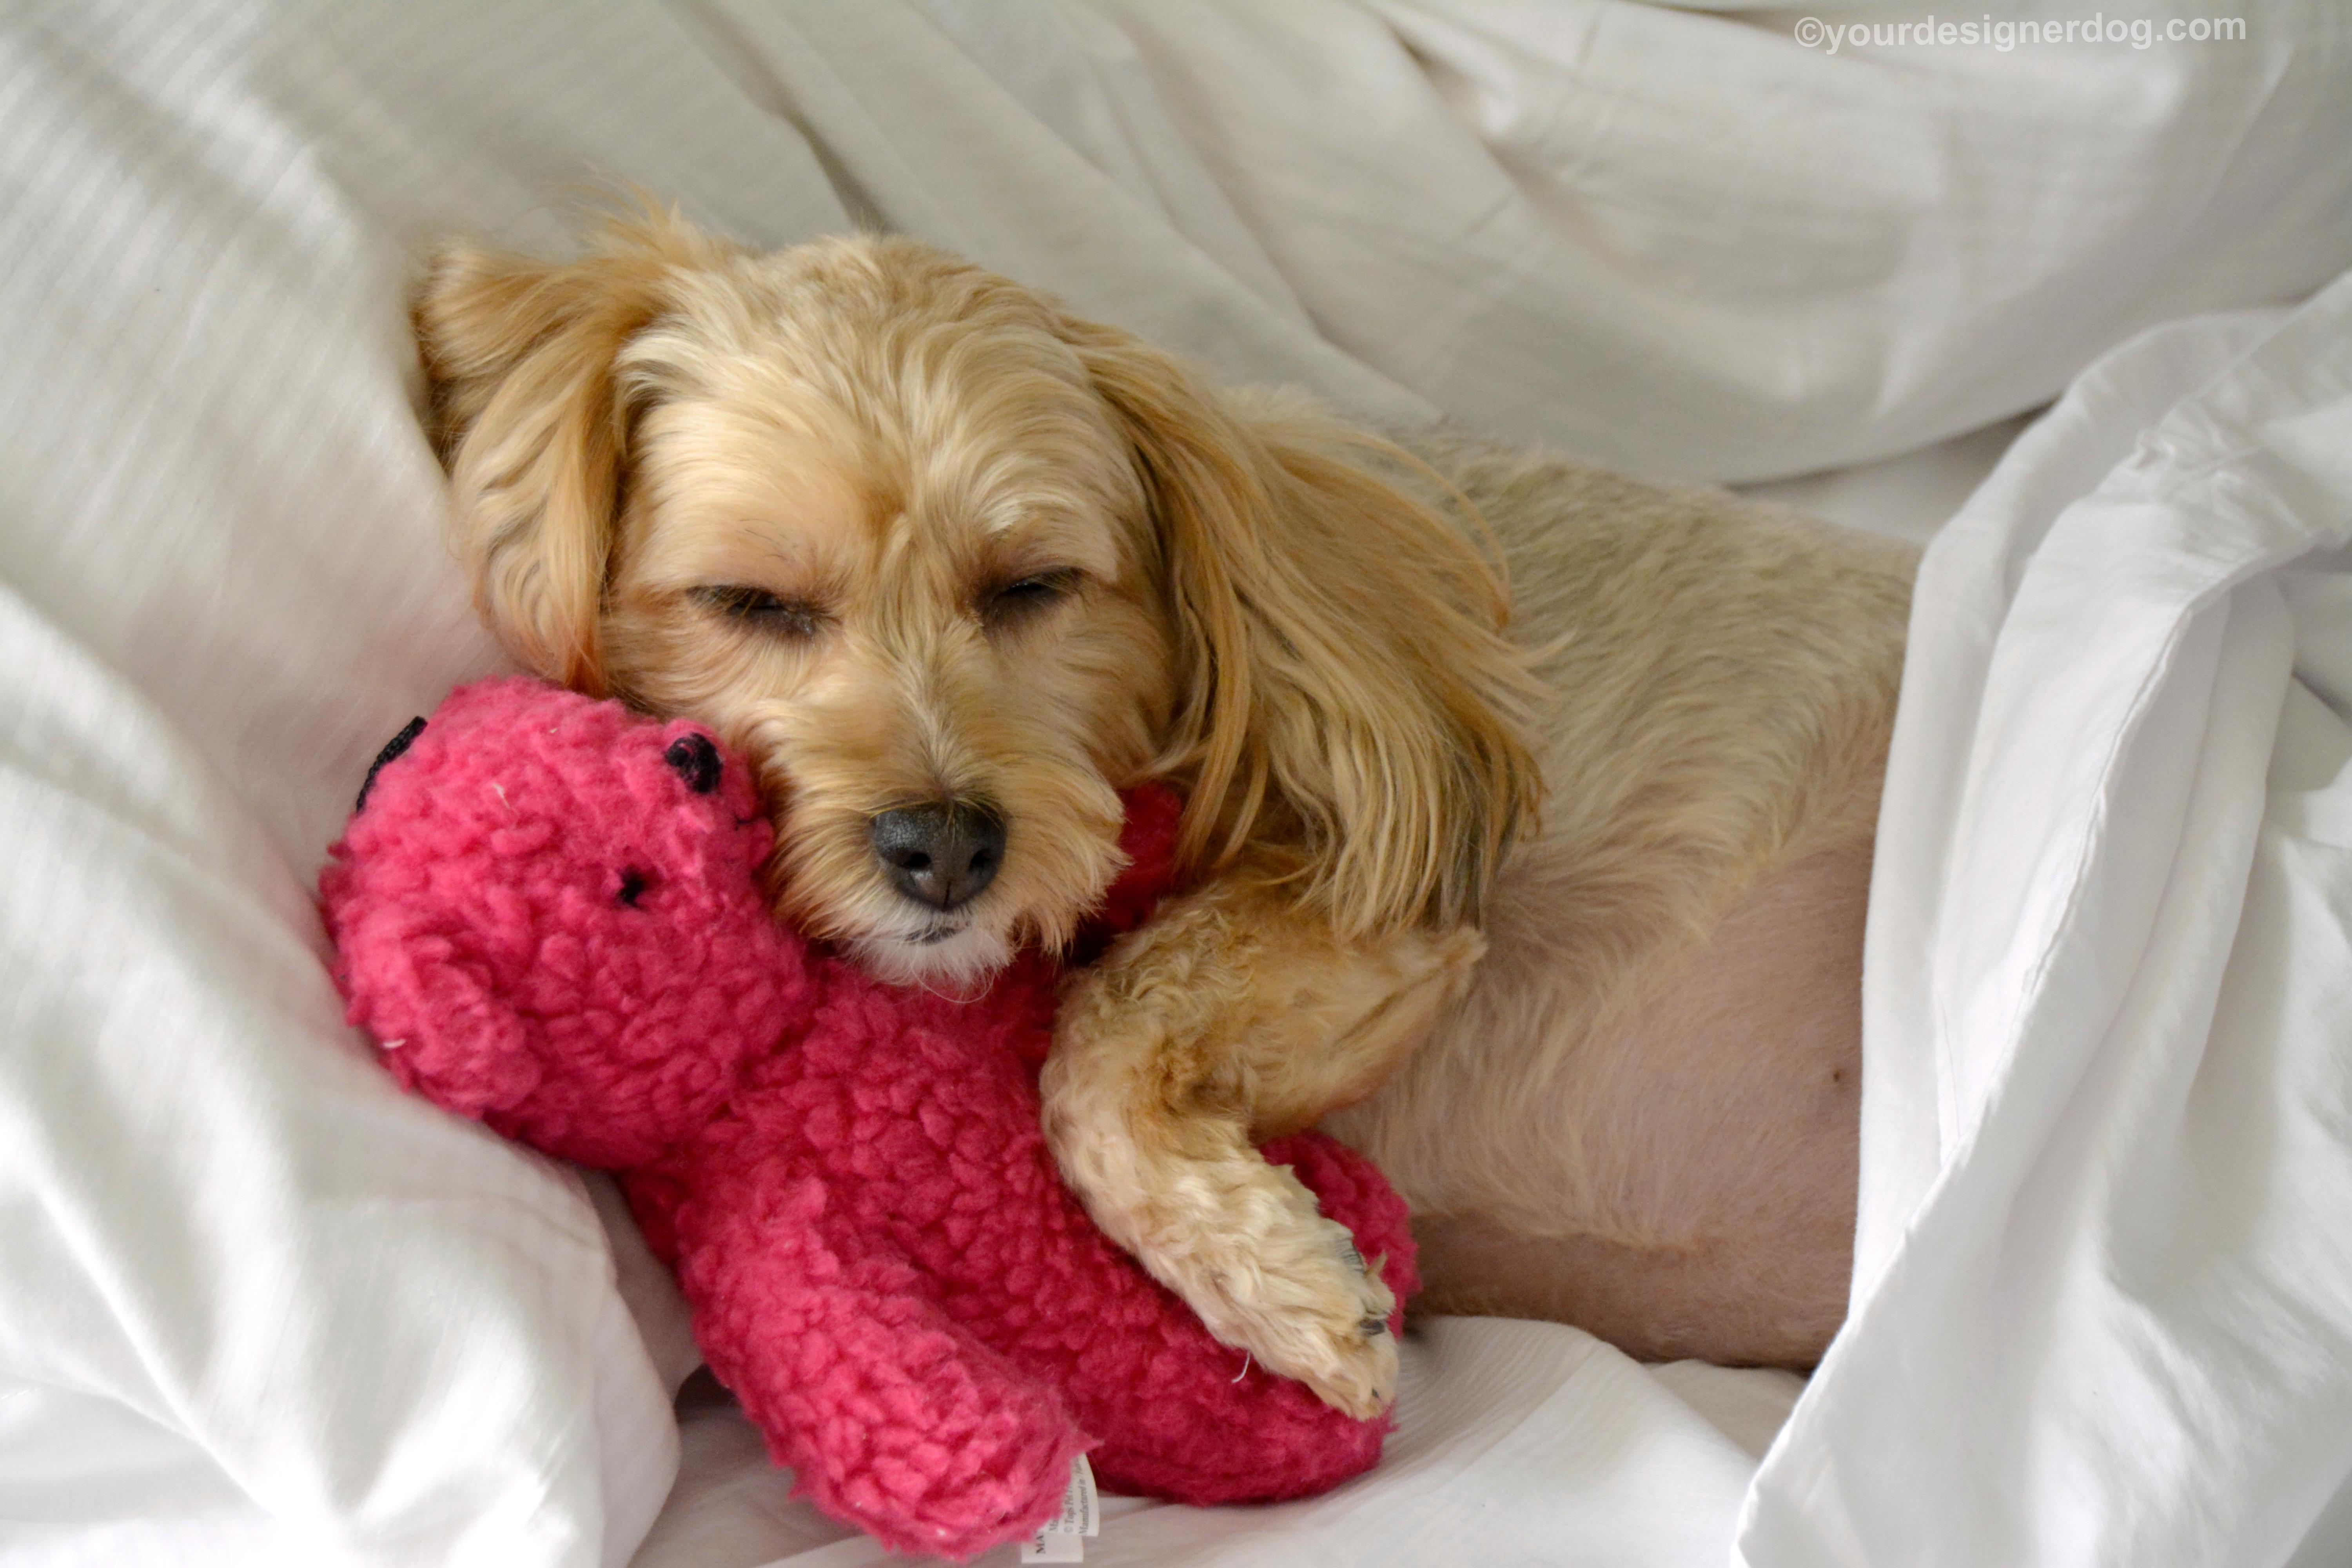 dogs, designer dogs, Yorkipoo, yorkie poo, sleepy puppy, selfie, dogs in bed, teddy bear